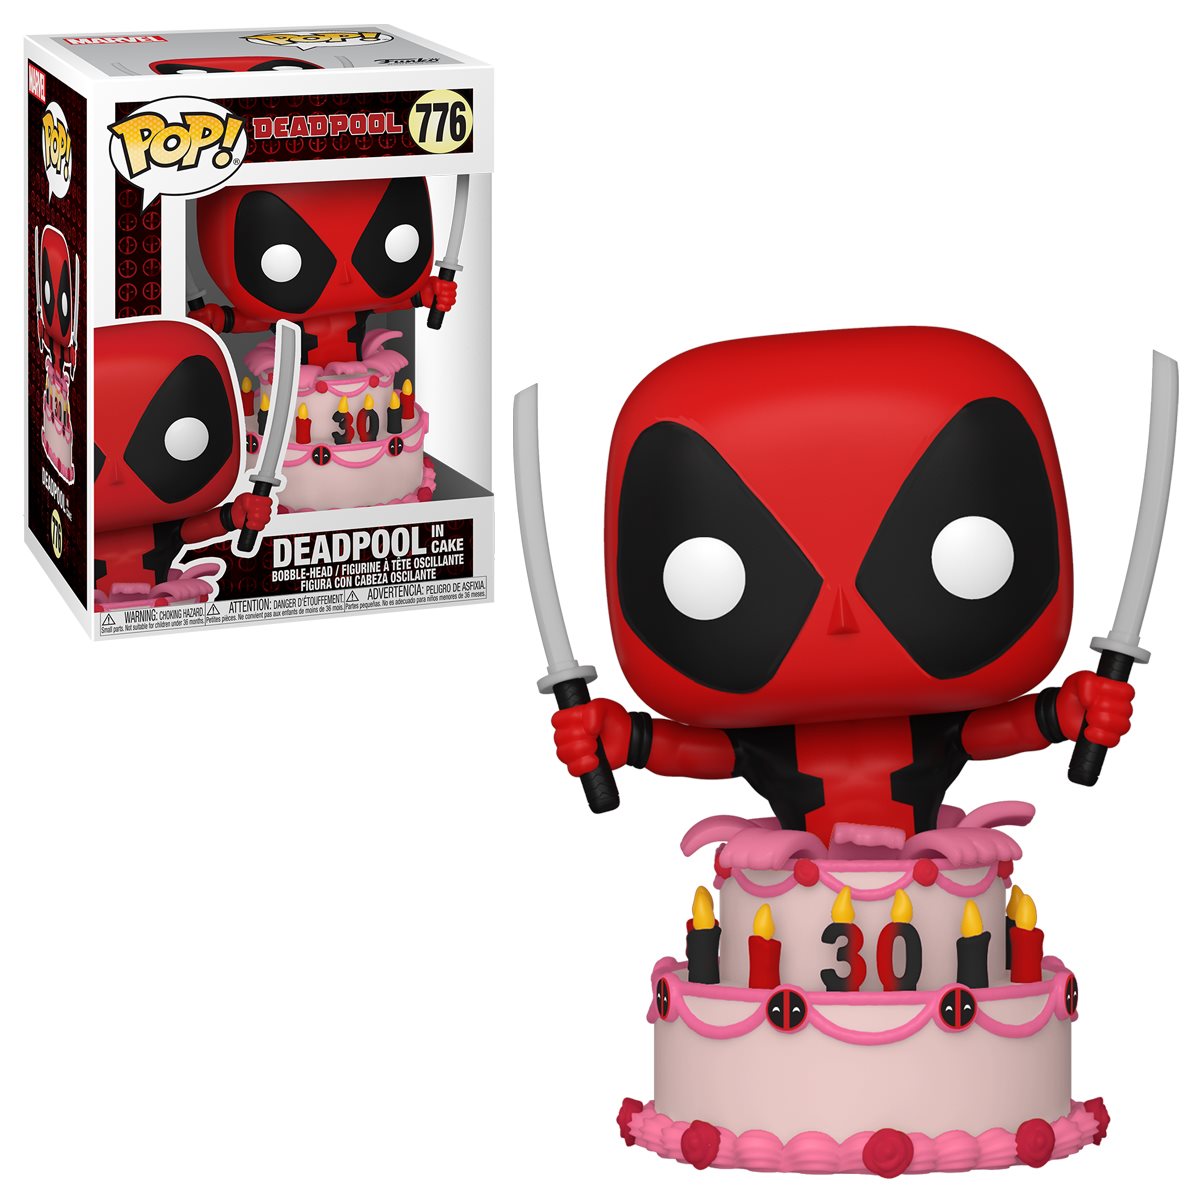 Deadpool 30th Anniversary Deadpool in Cake Funko Pop